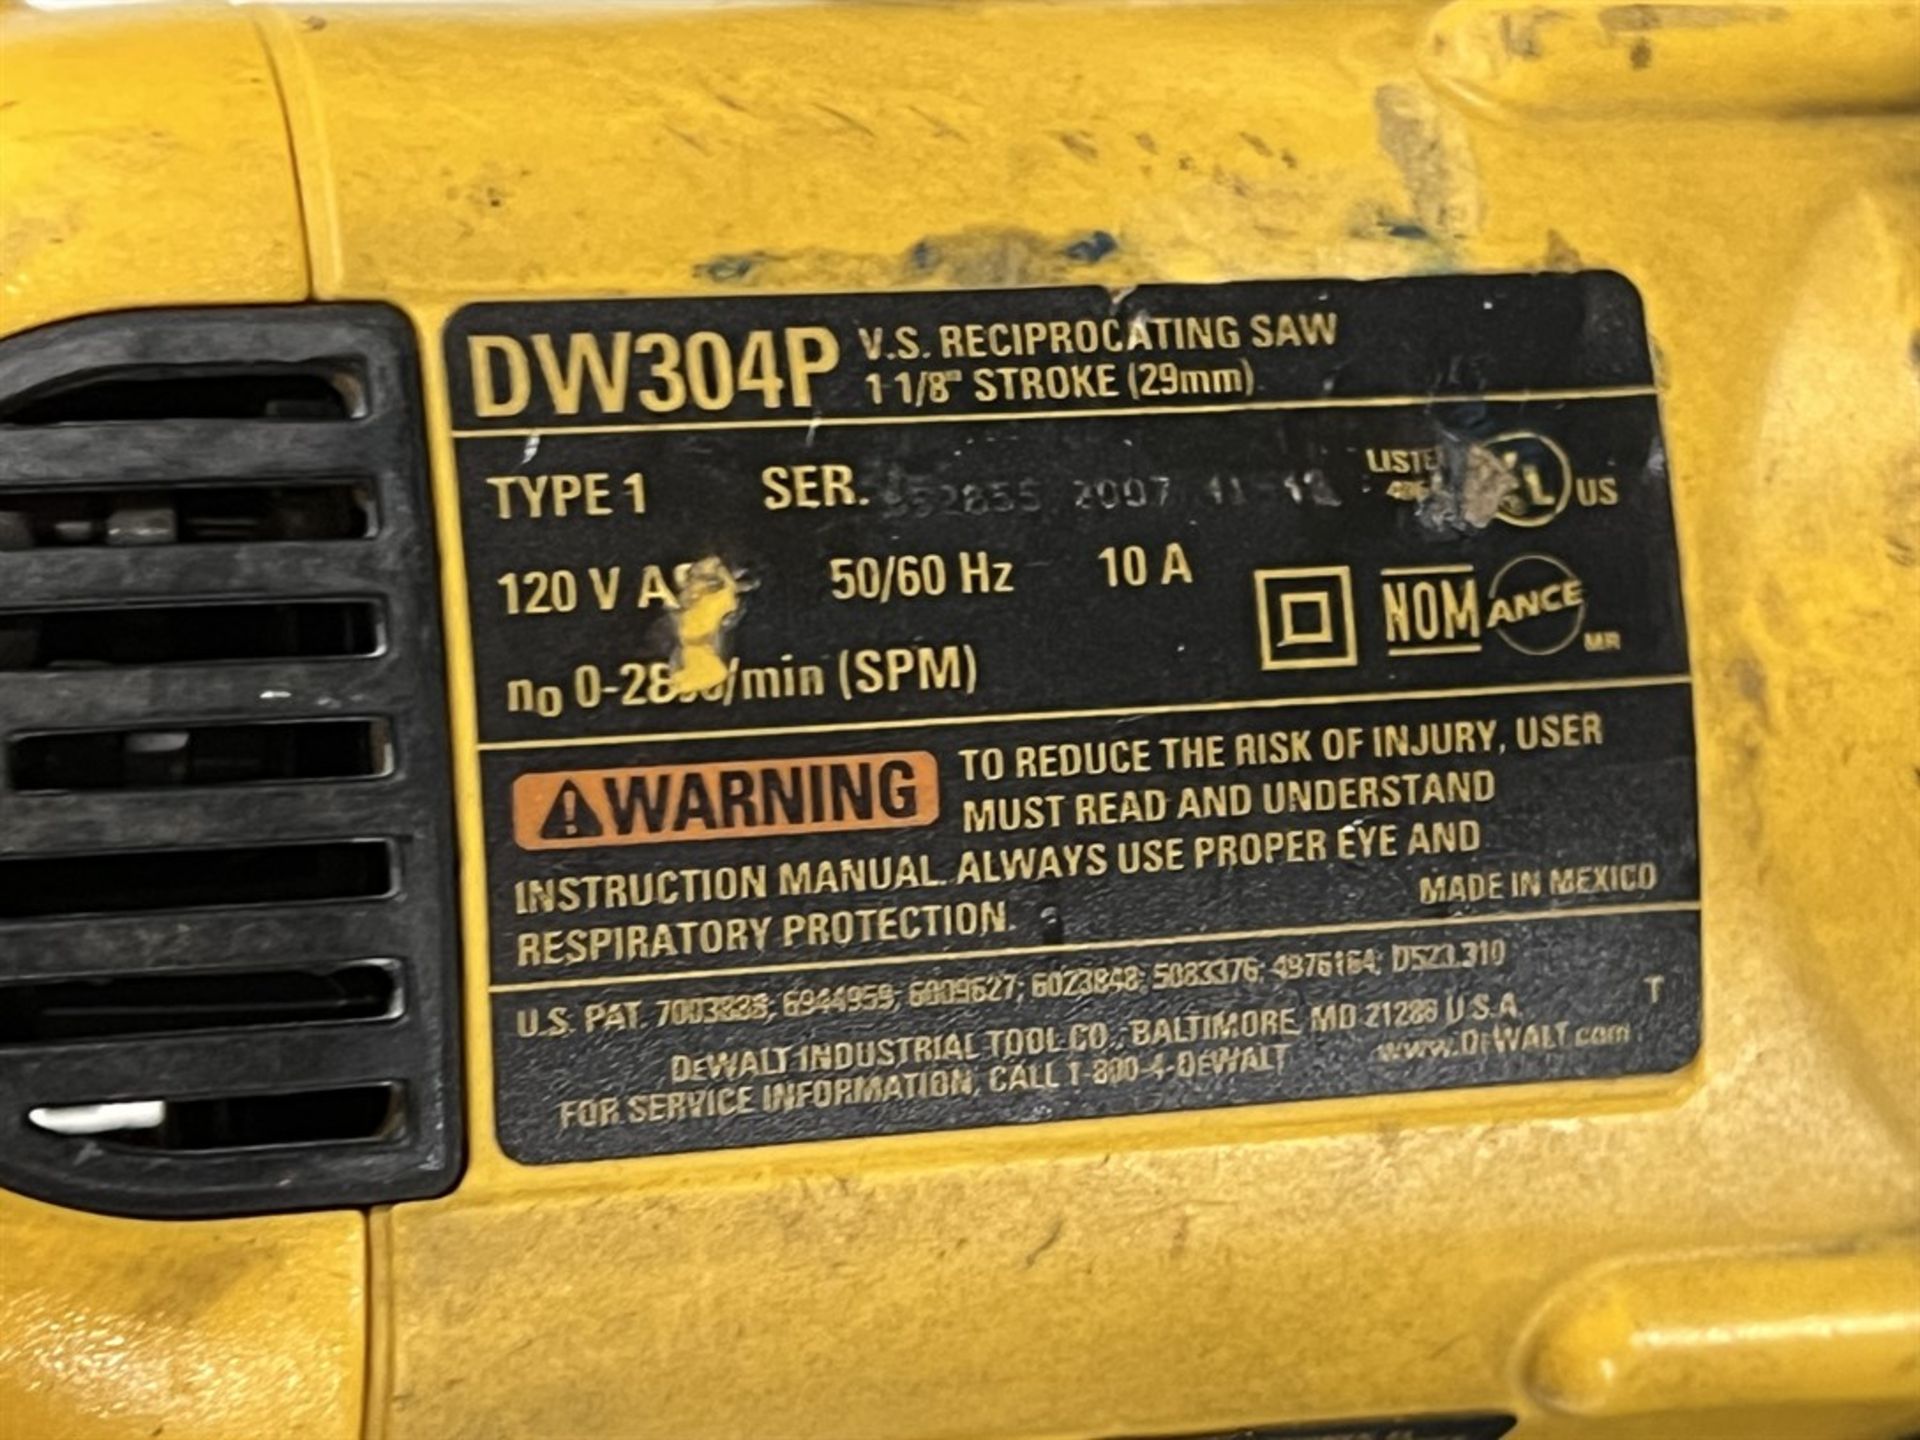 DEWALT DW304P VS Reciprocating Saw - Image 3 of 3